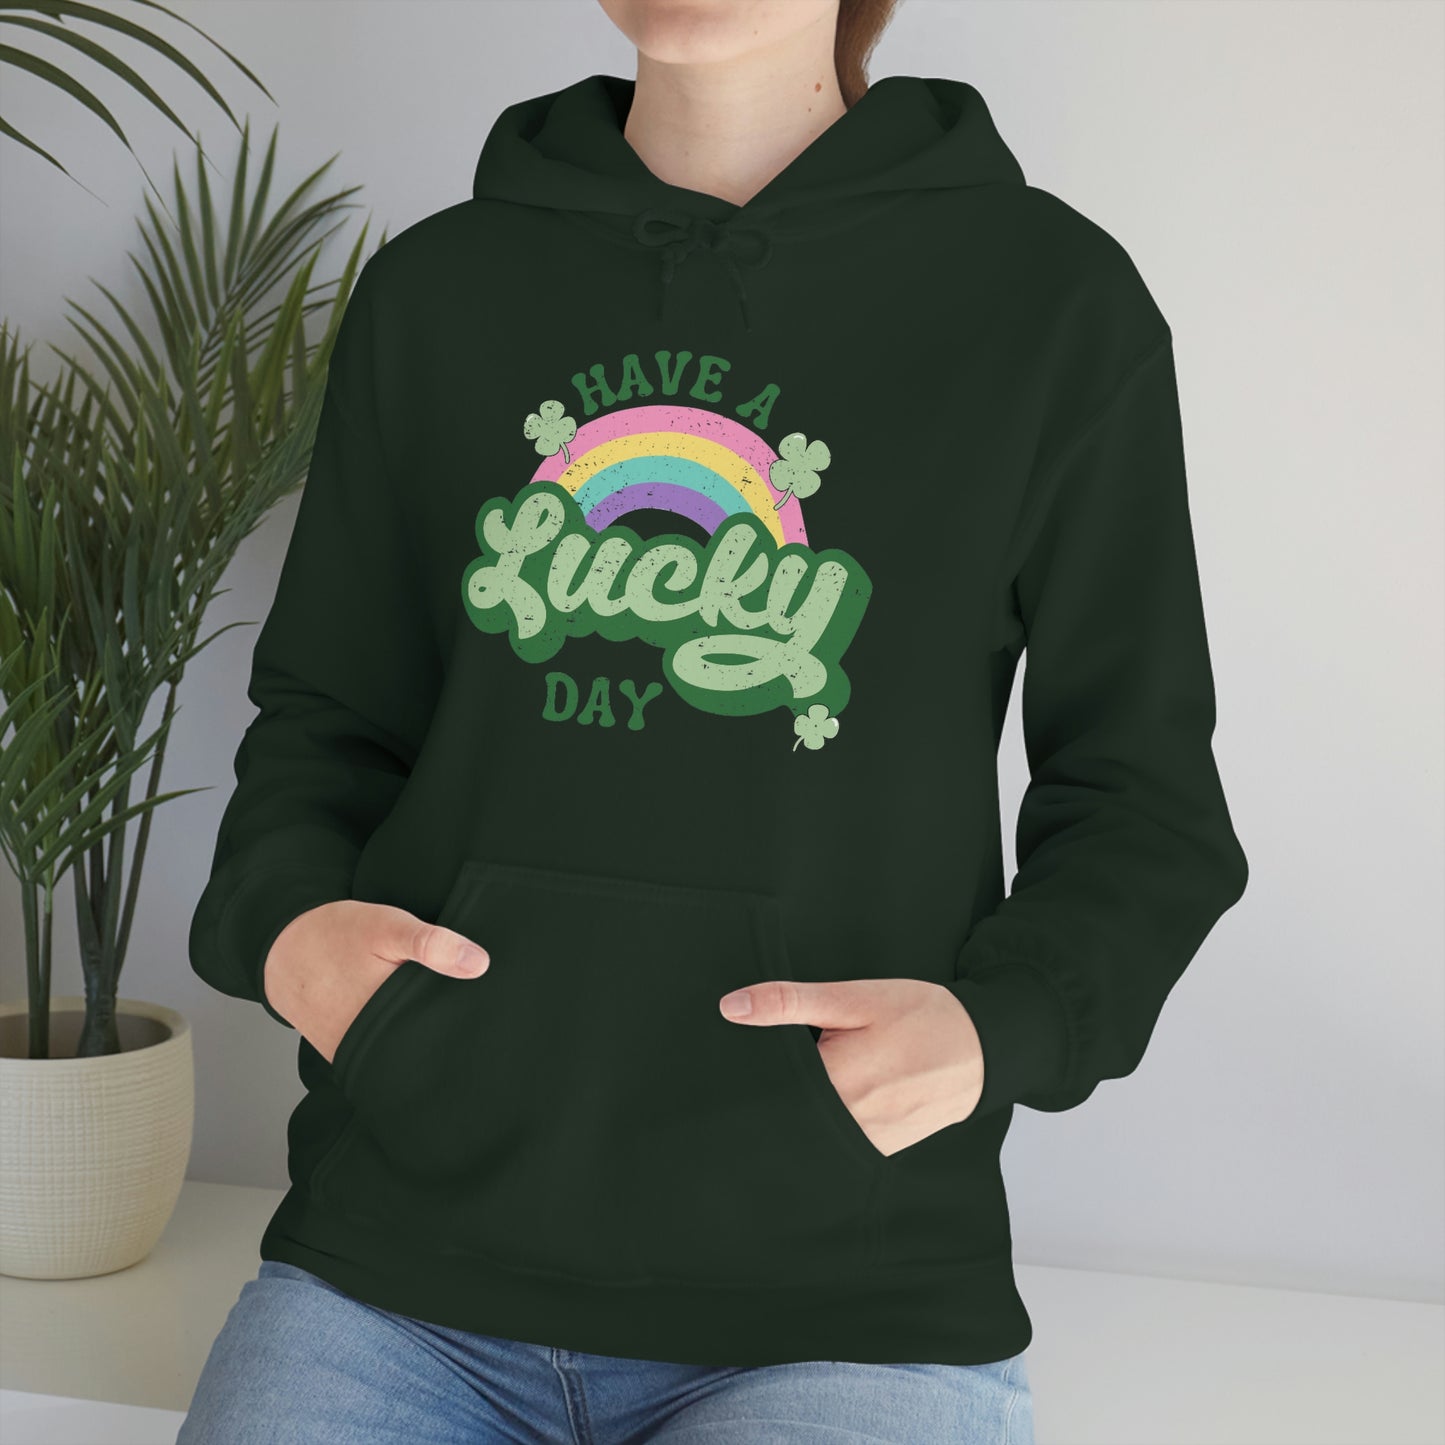 Lucky Day St Patricks Hoodie | St Patricks day Shirt | Shamrock Lucky Shirt | Retro St Patricks day Shirt | St Patricks Shirt